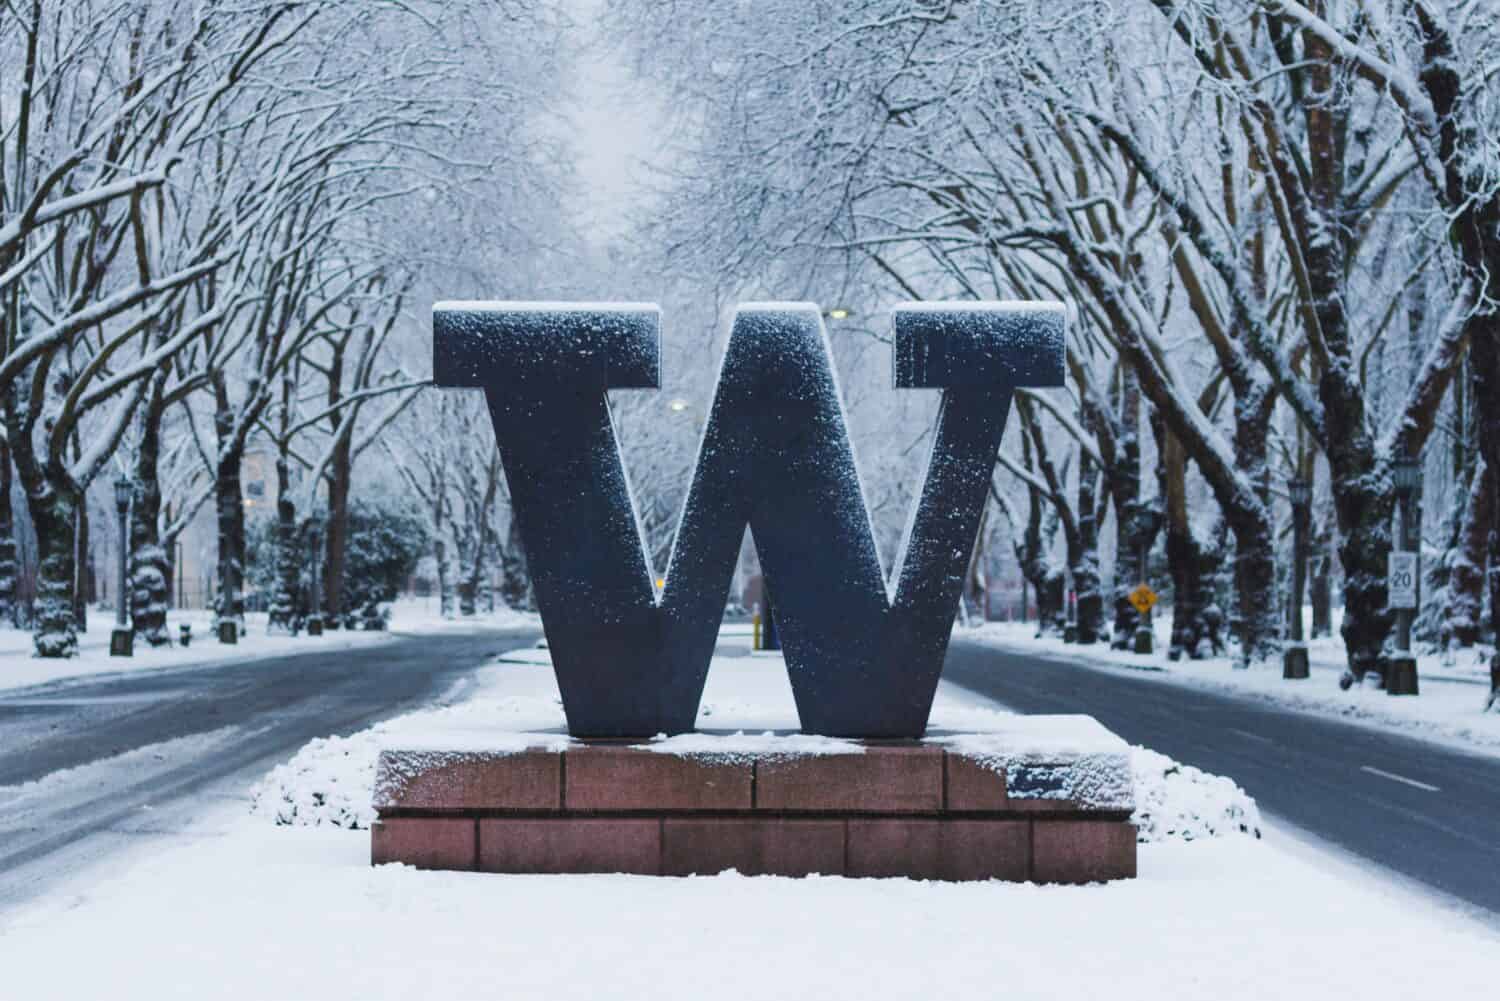 University of Washington welcome sign under snow